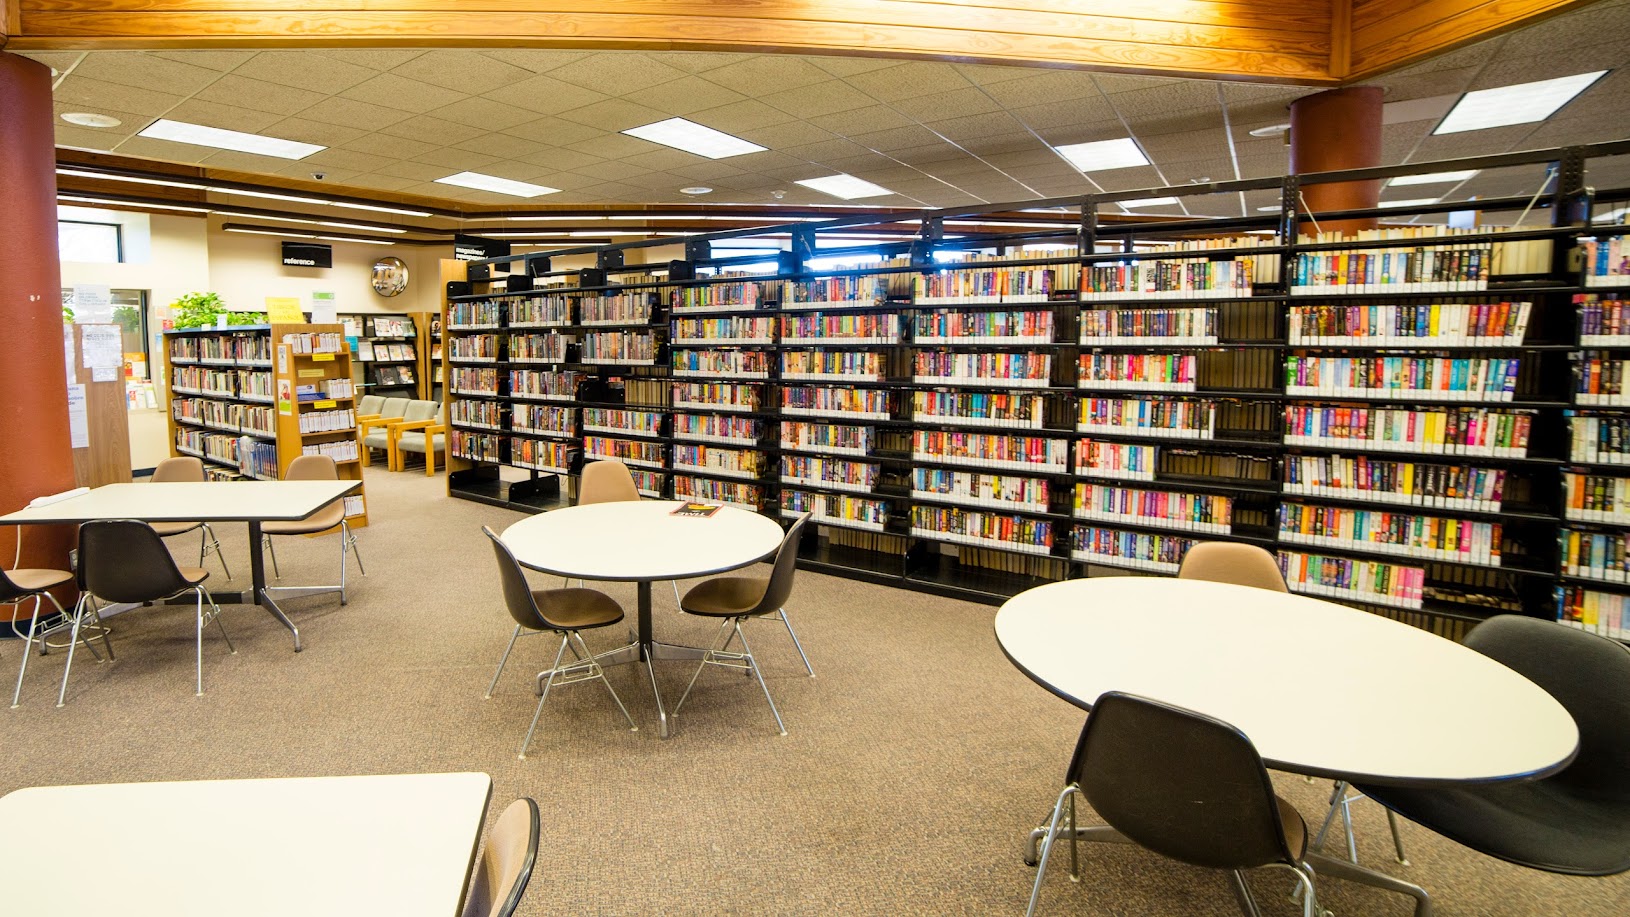 Austin Public Library